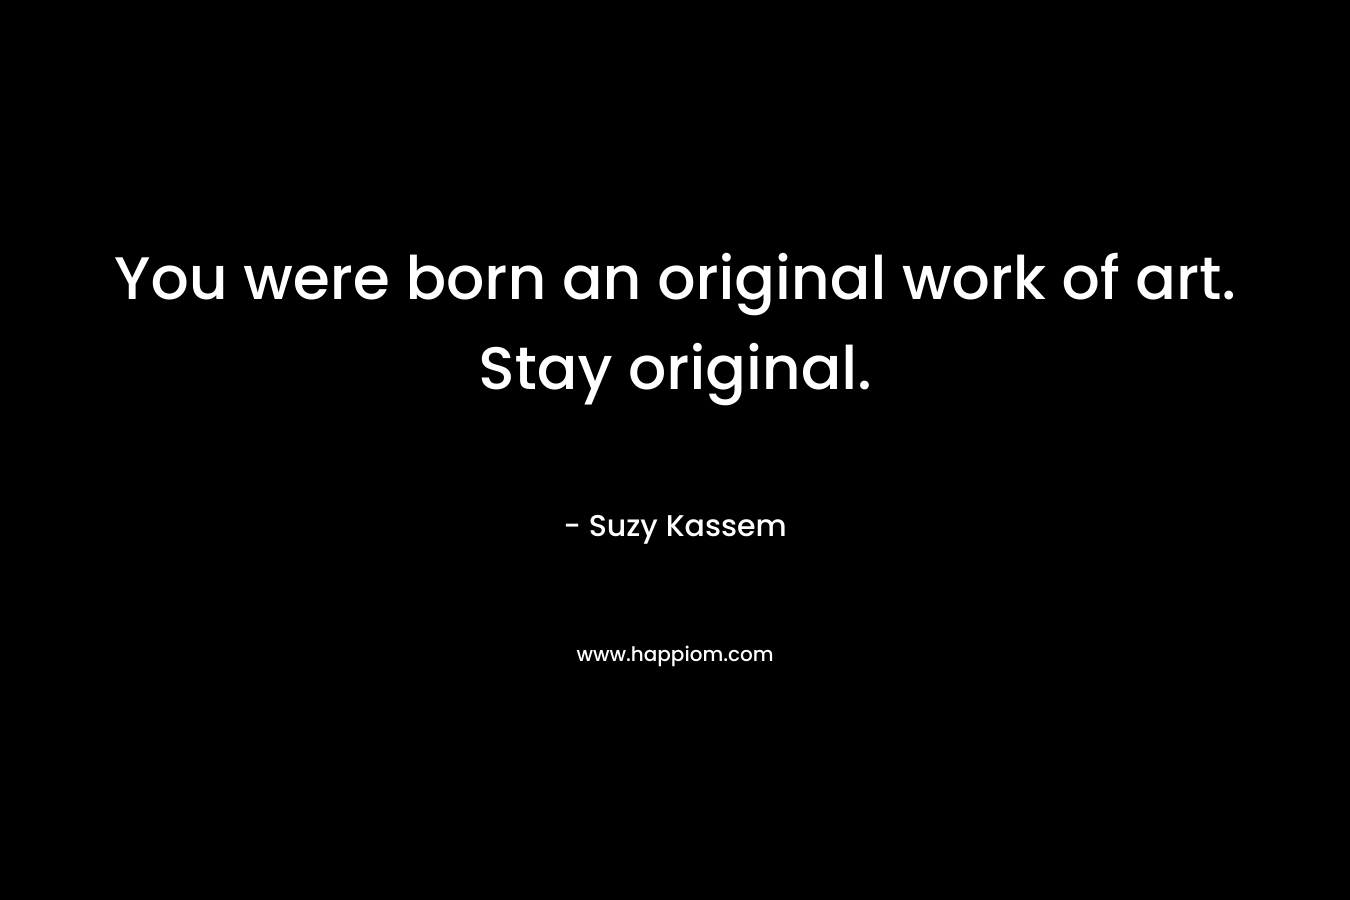 You were born an original work of art. Stay original.